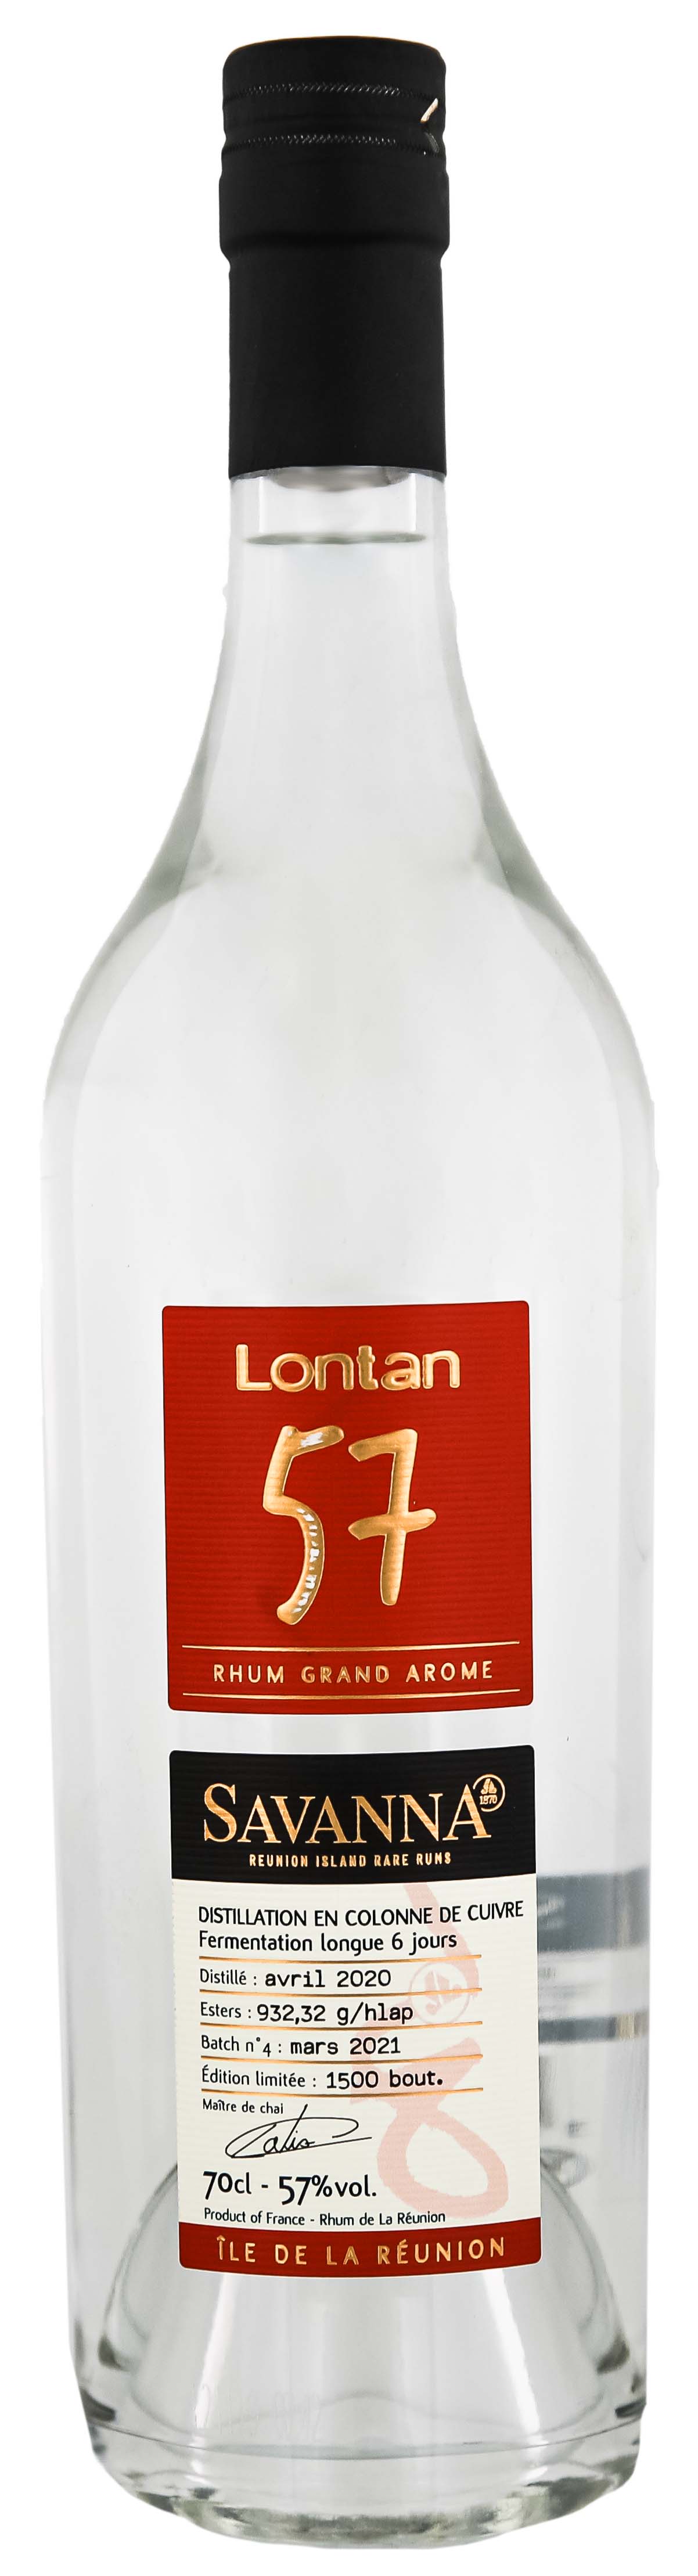 Savanna Lontan 57 Rum Blanc 0,7L 57%